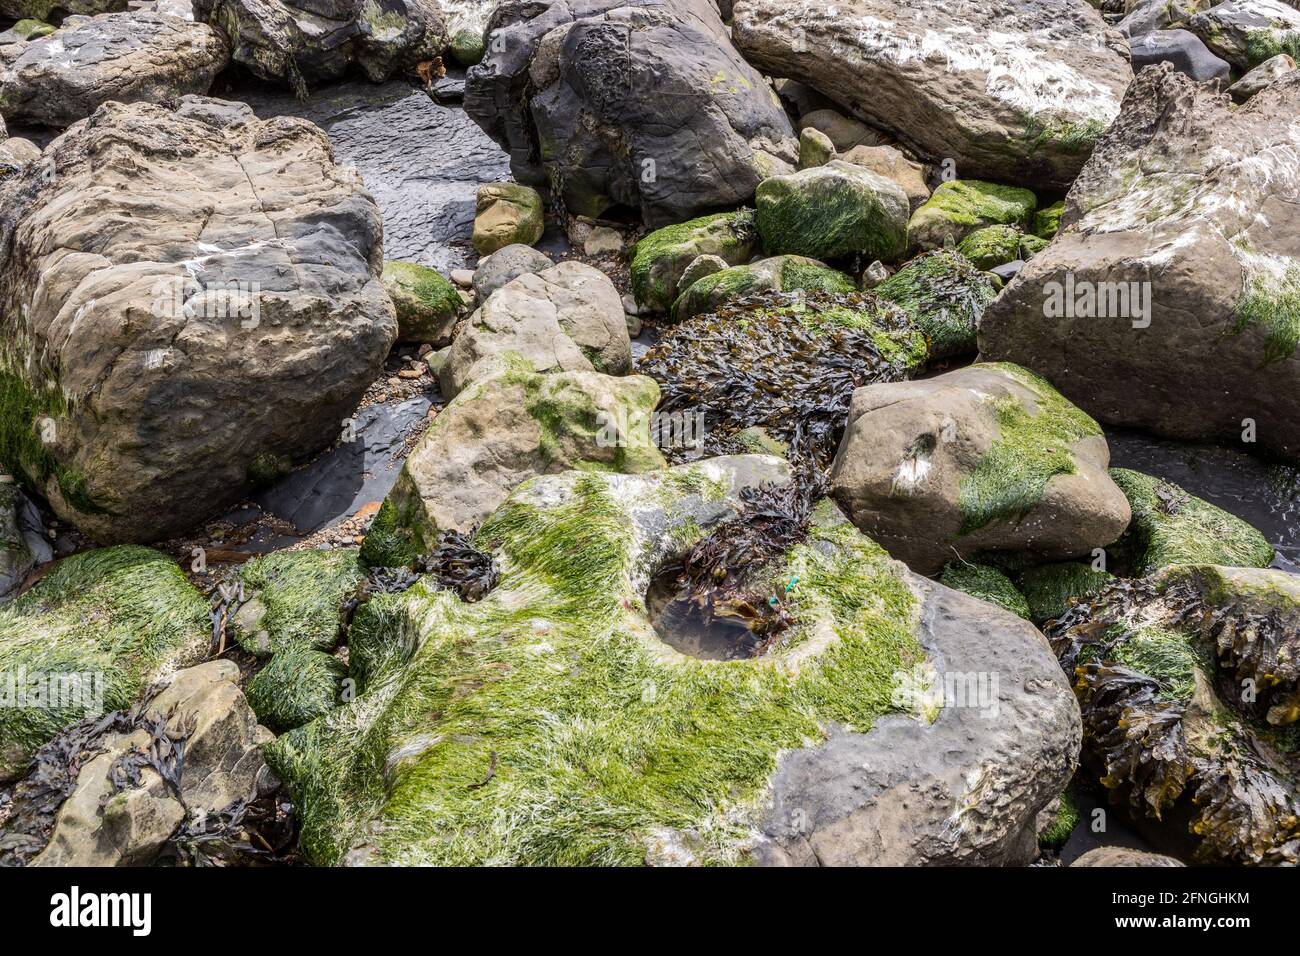 Spiral wrack, Fucus spiralis, Gutweed, Ulva intestinalis, Chapman's Pool,  Isle of Purbeck, Jurassic Coast, Dorset, UK Stock Photo